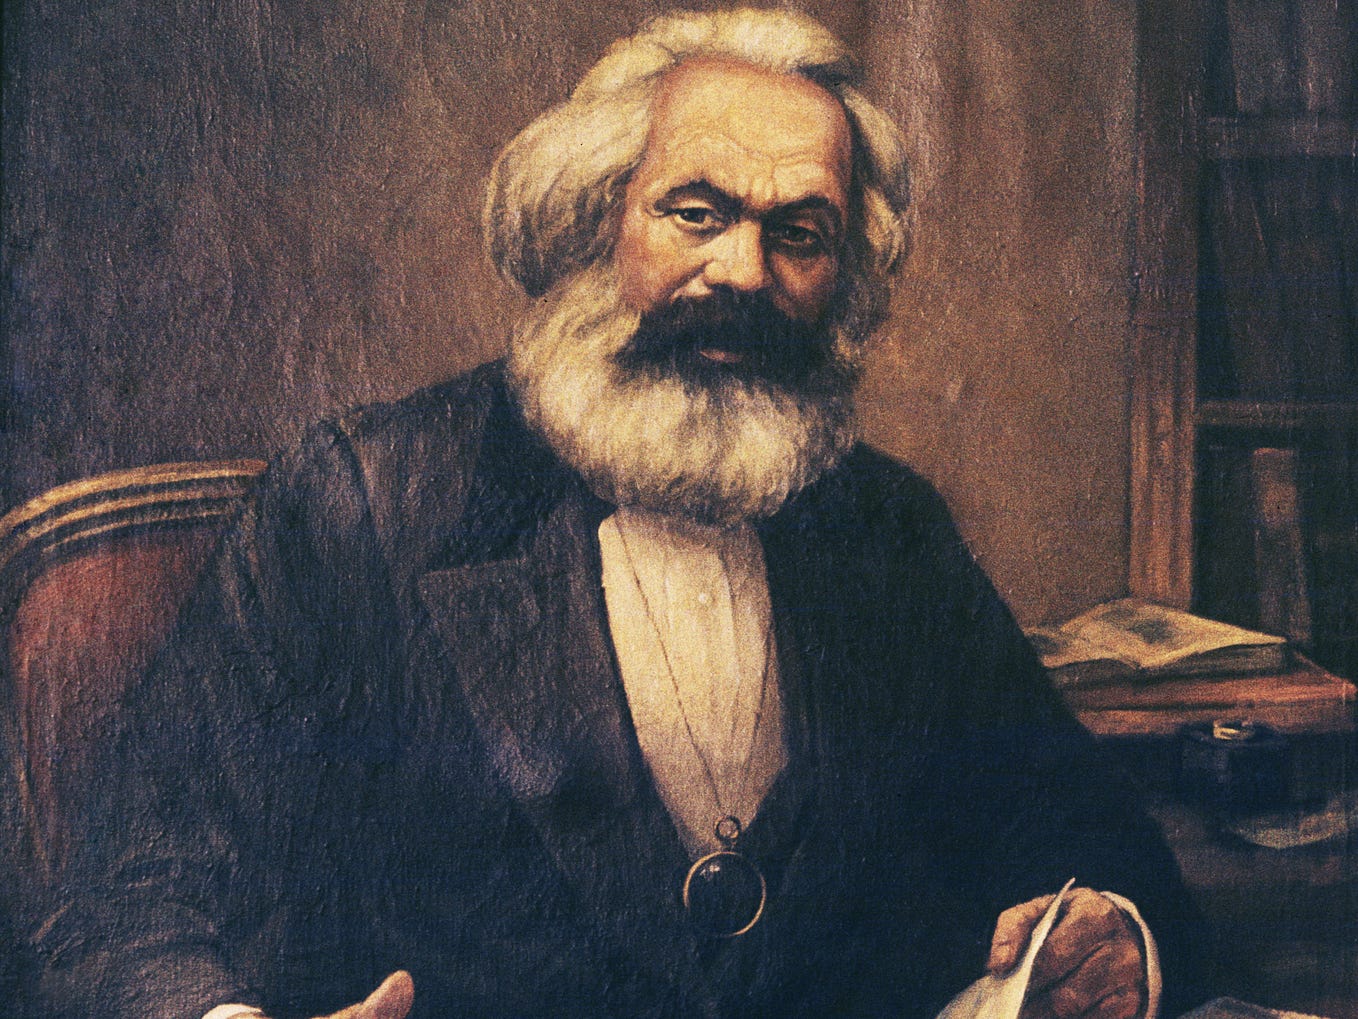 Marx the German University Student